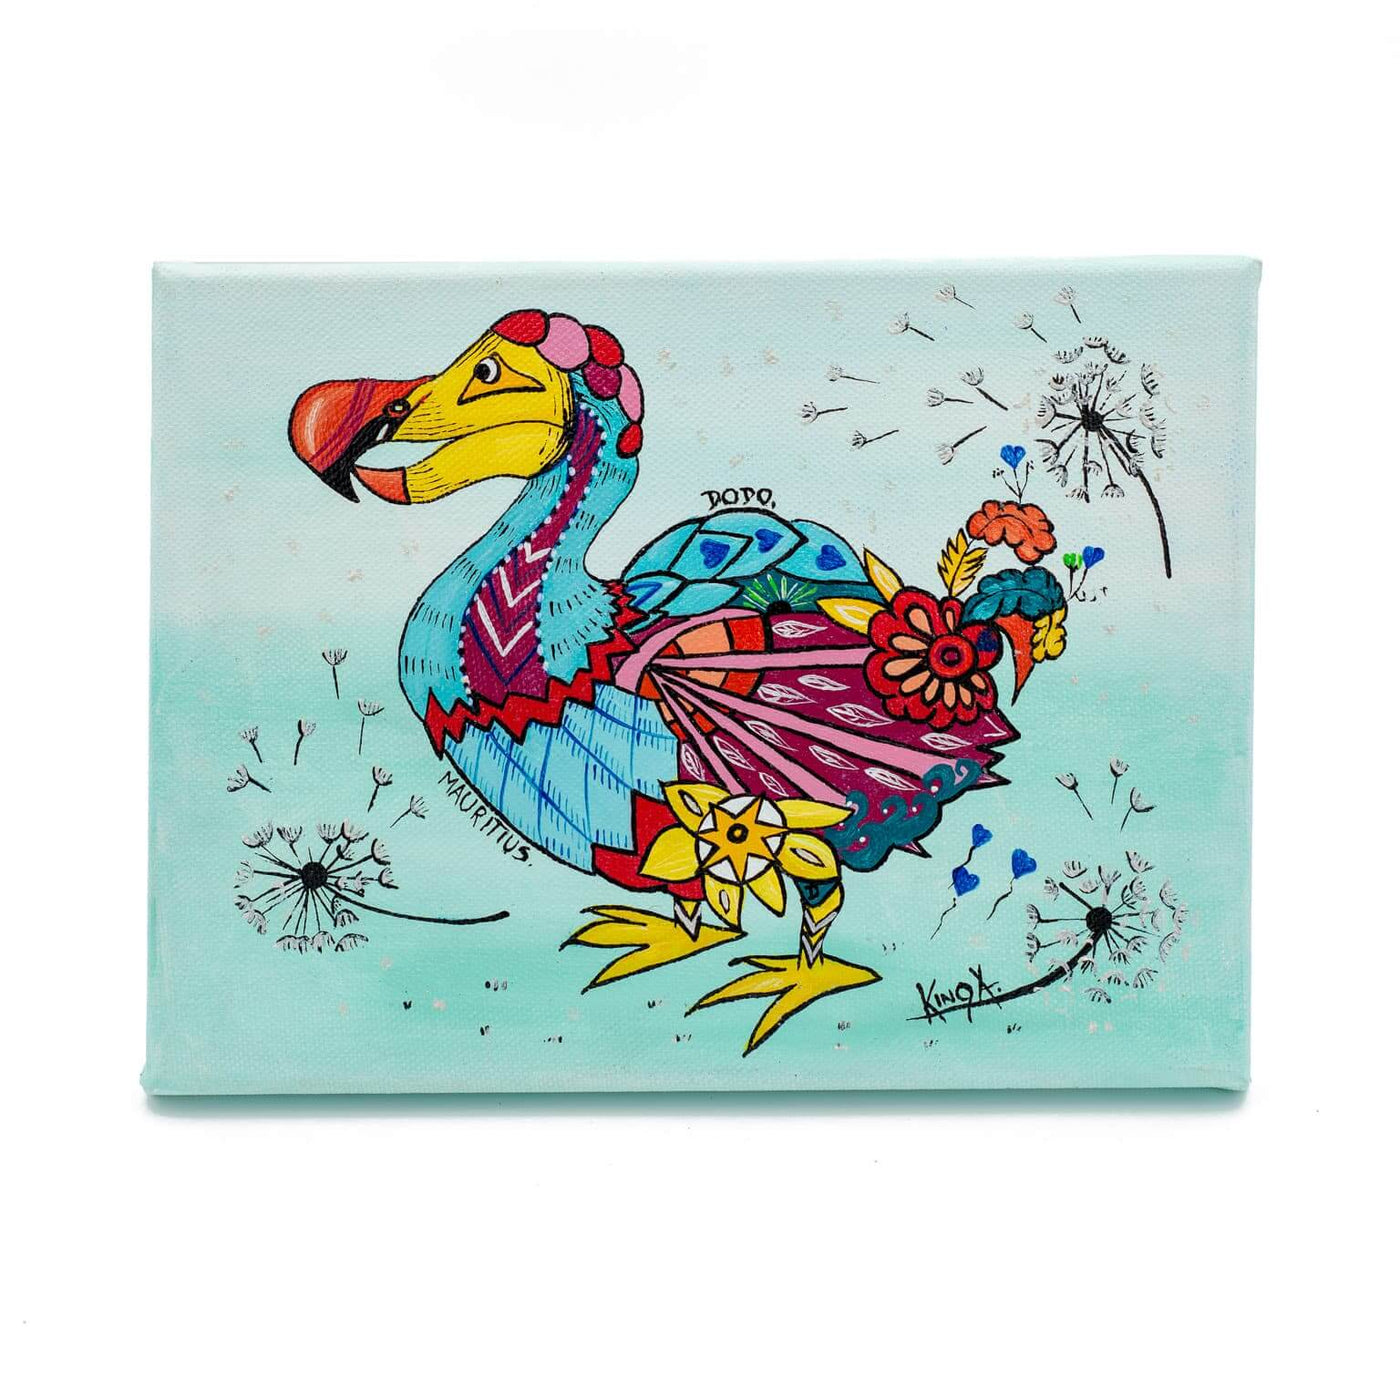 Mauritius-Authentic-HandMade-Painting-Kinga, "Dodo"-DodoMarket